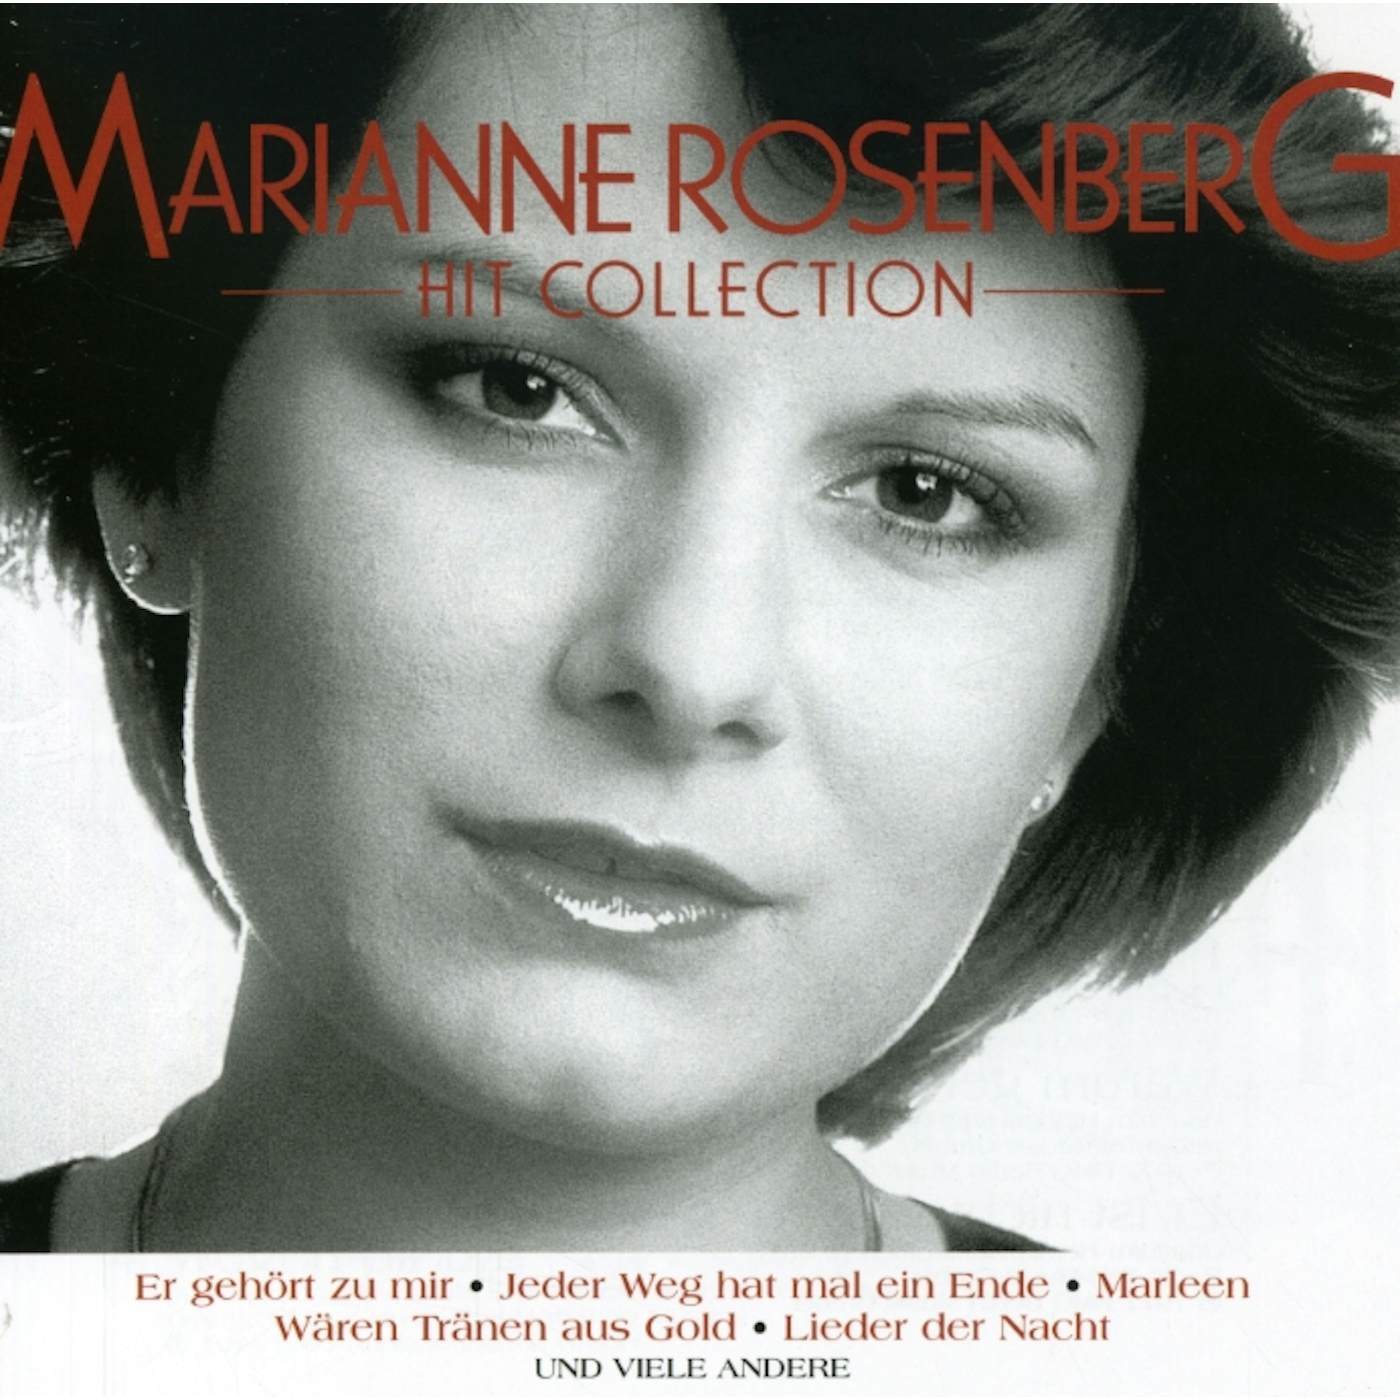 Marianne Rosenberg HIT COLLECTION CD